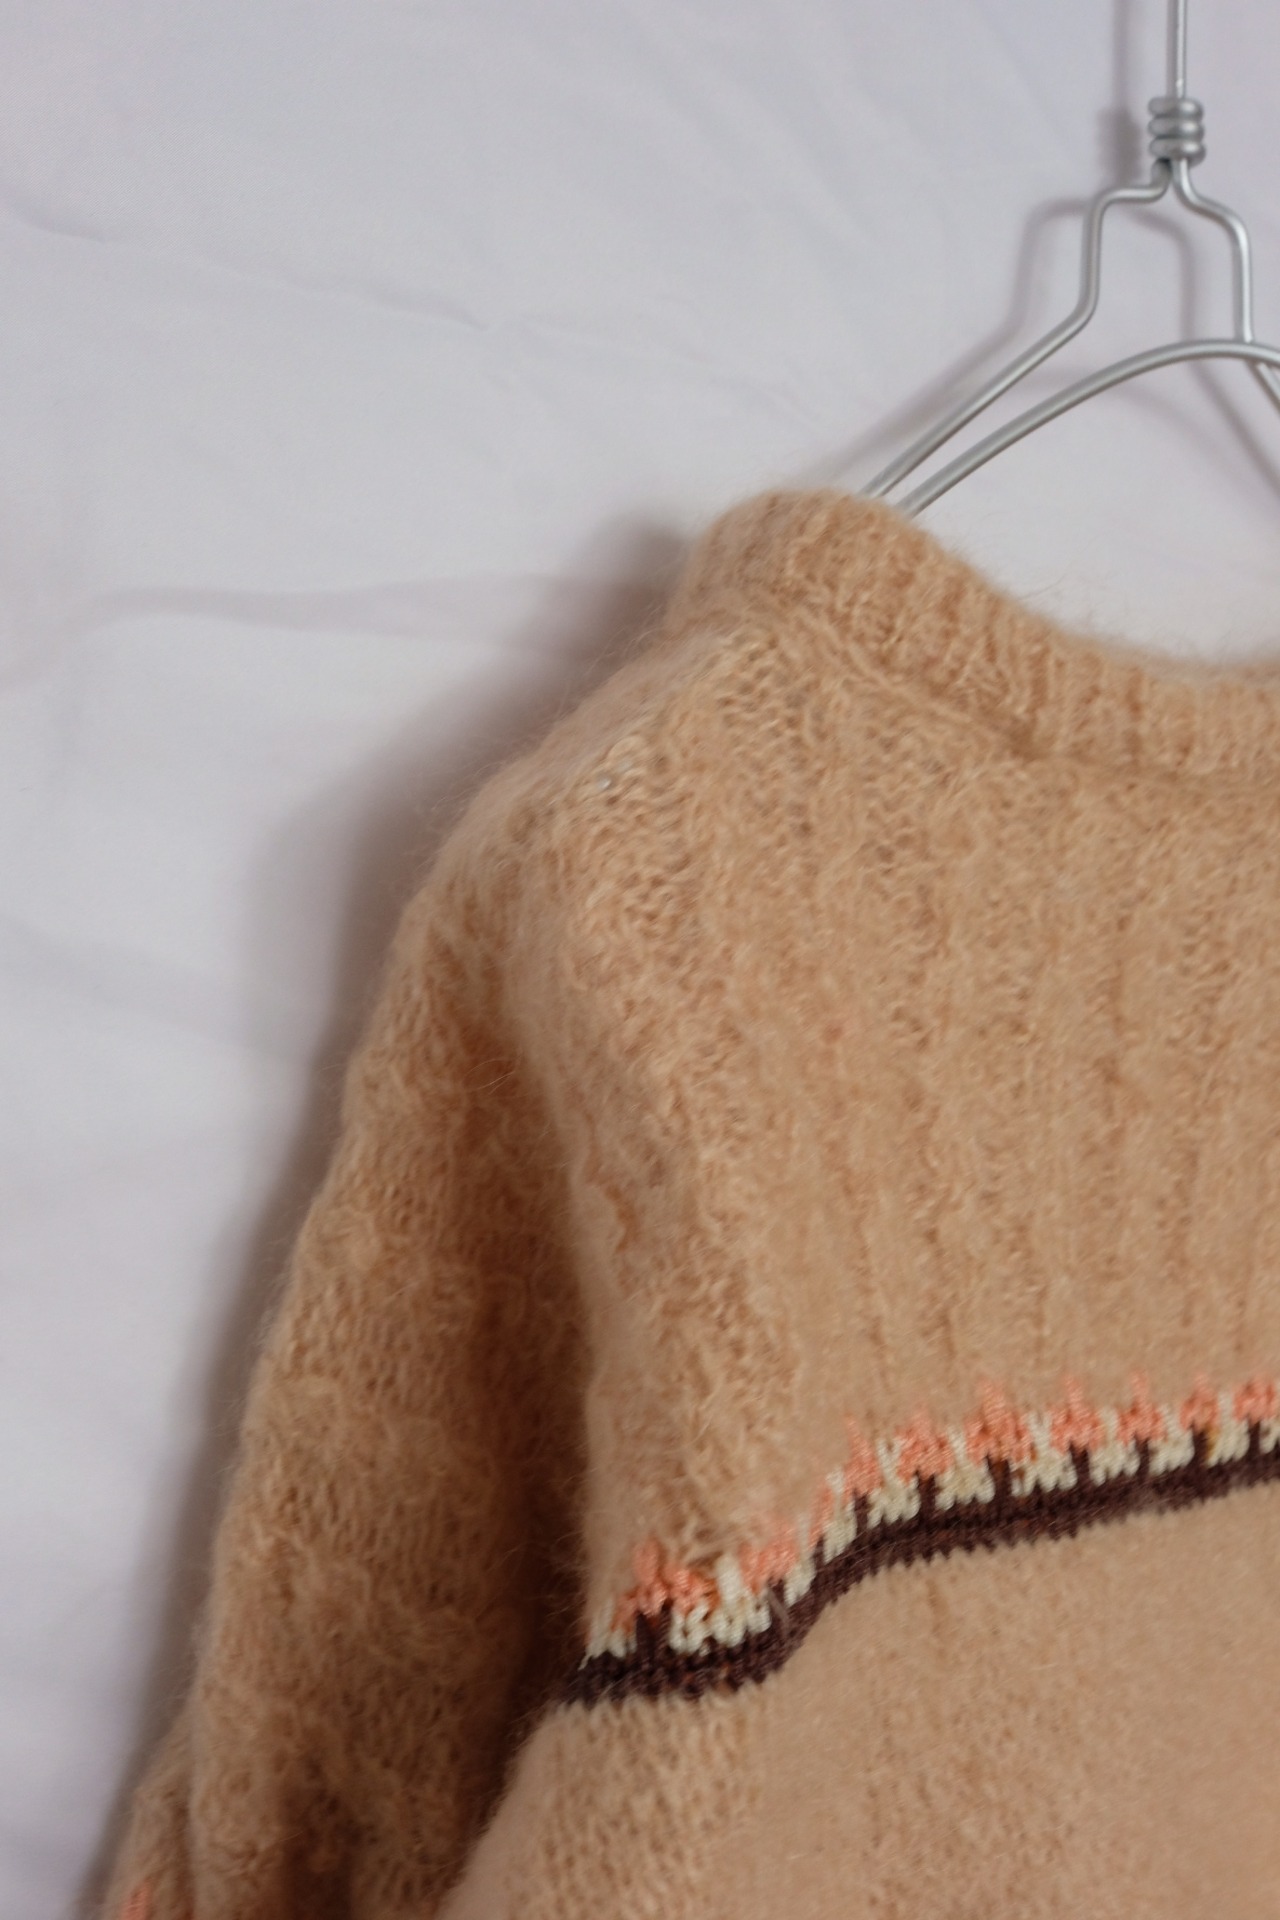 Lines design knit top